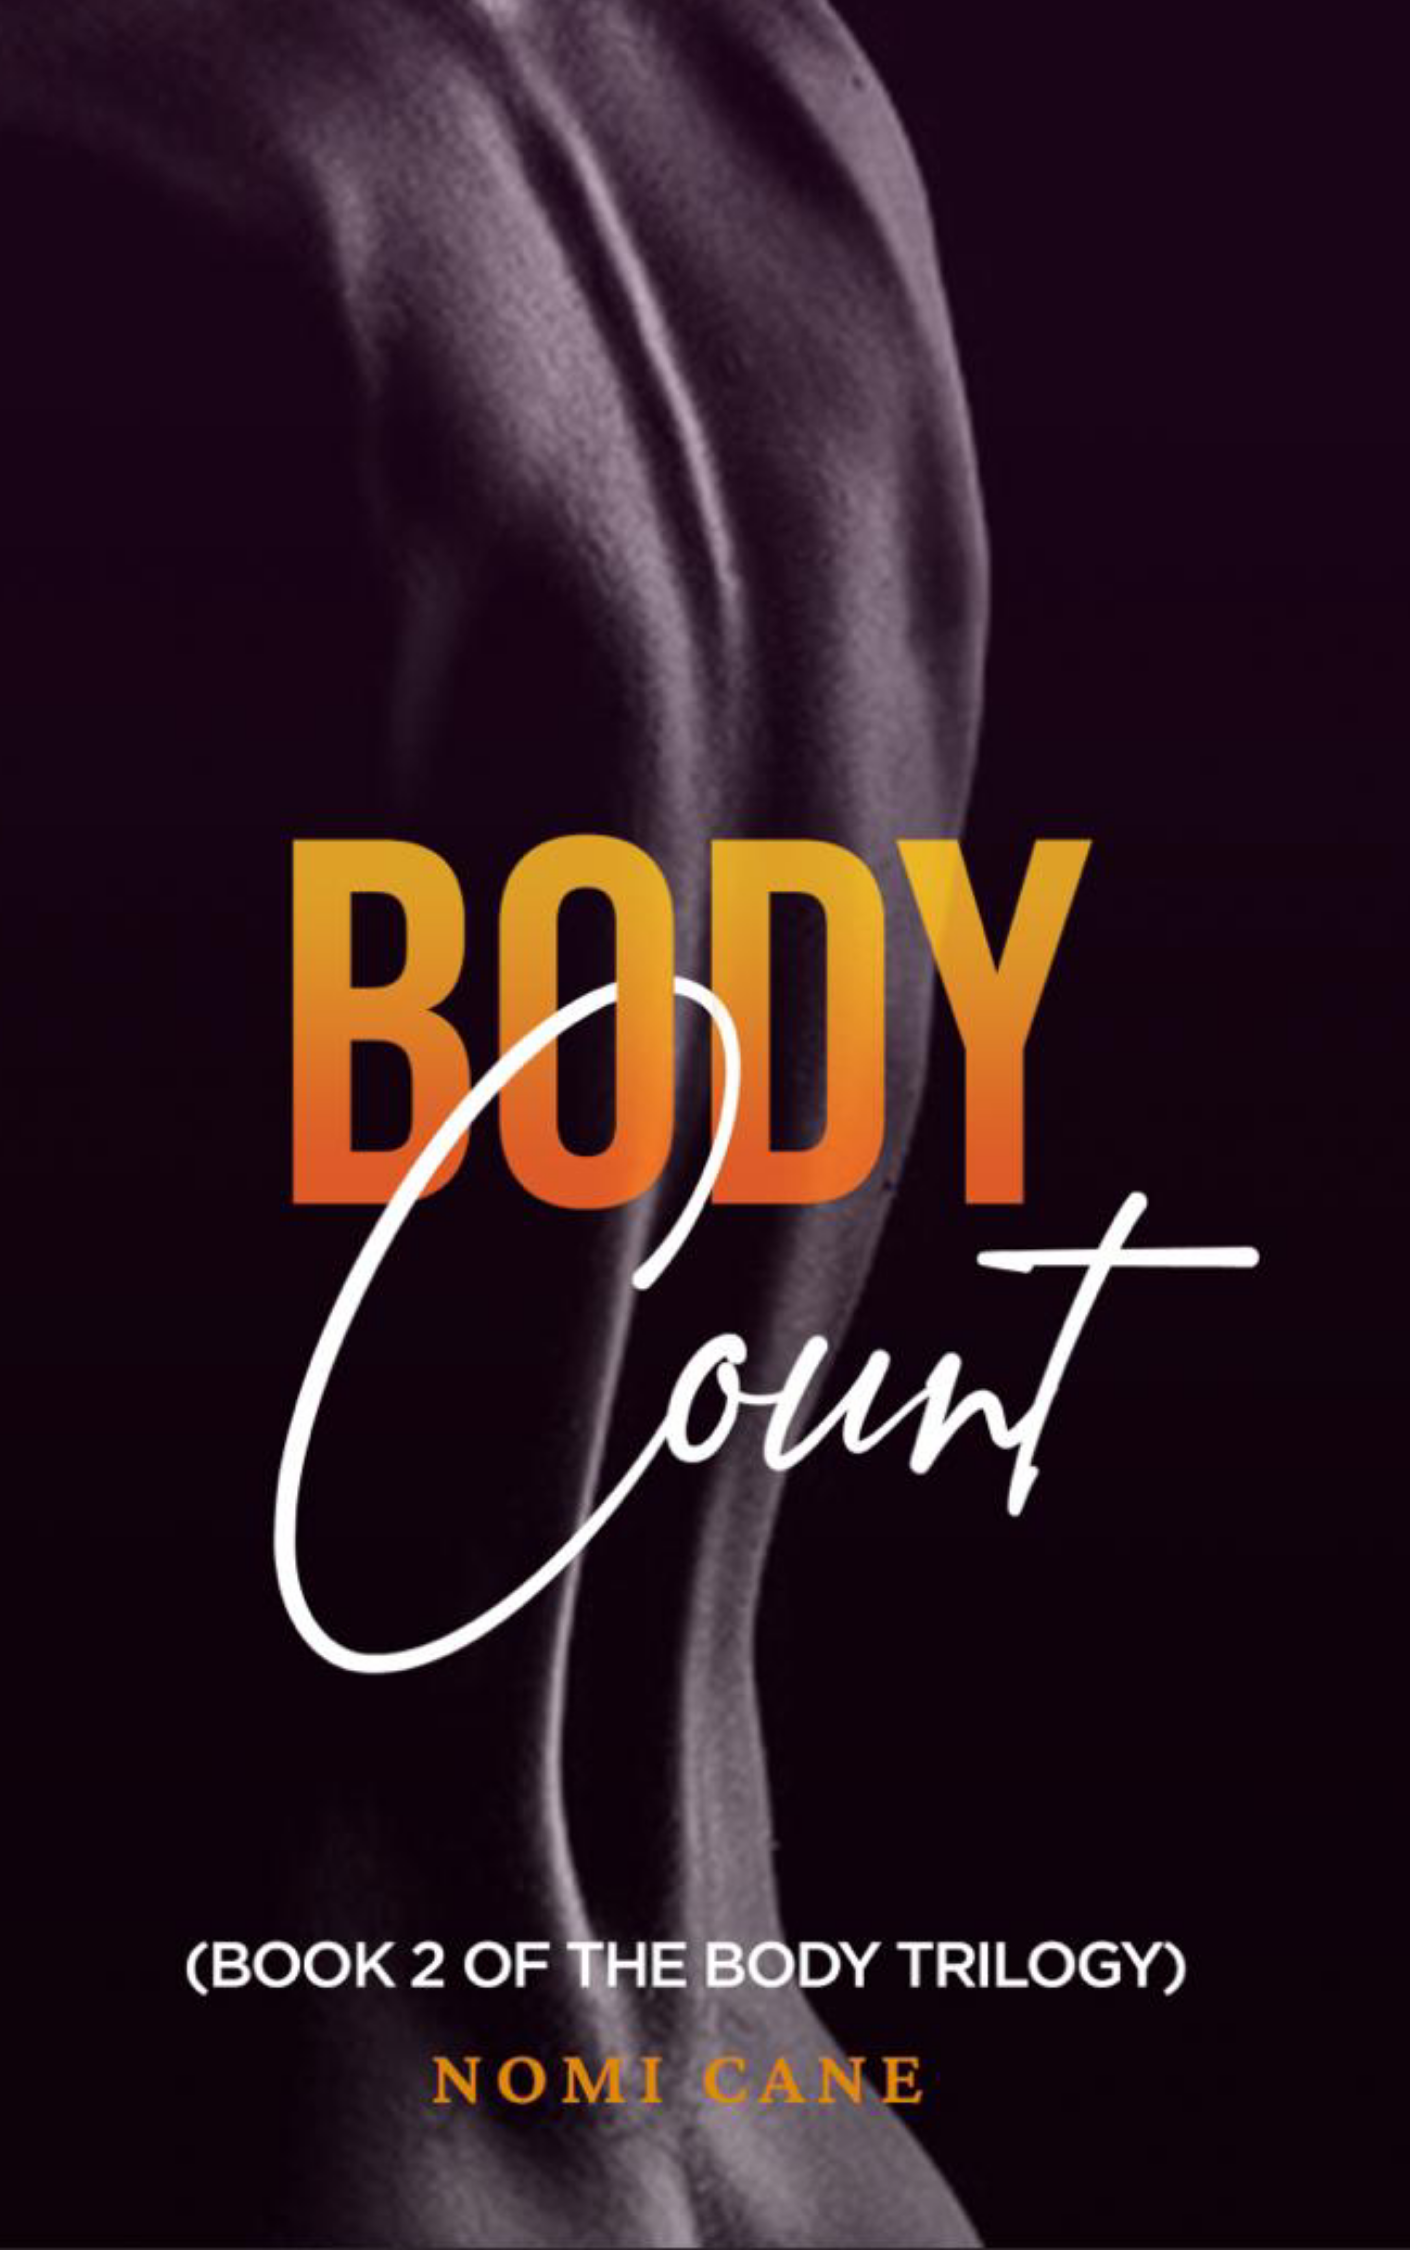 Body-Count